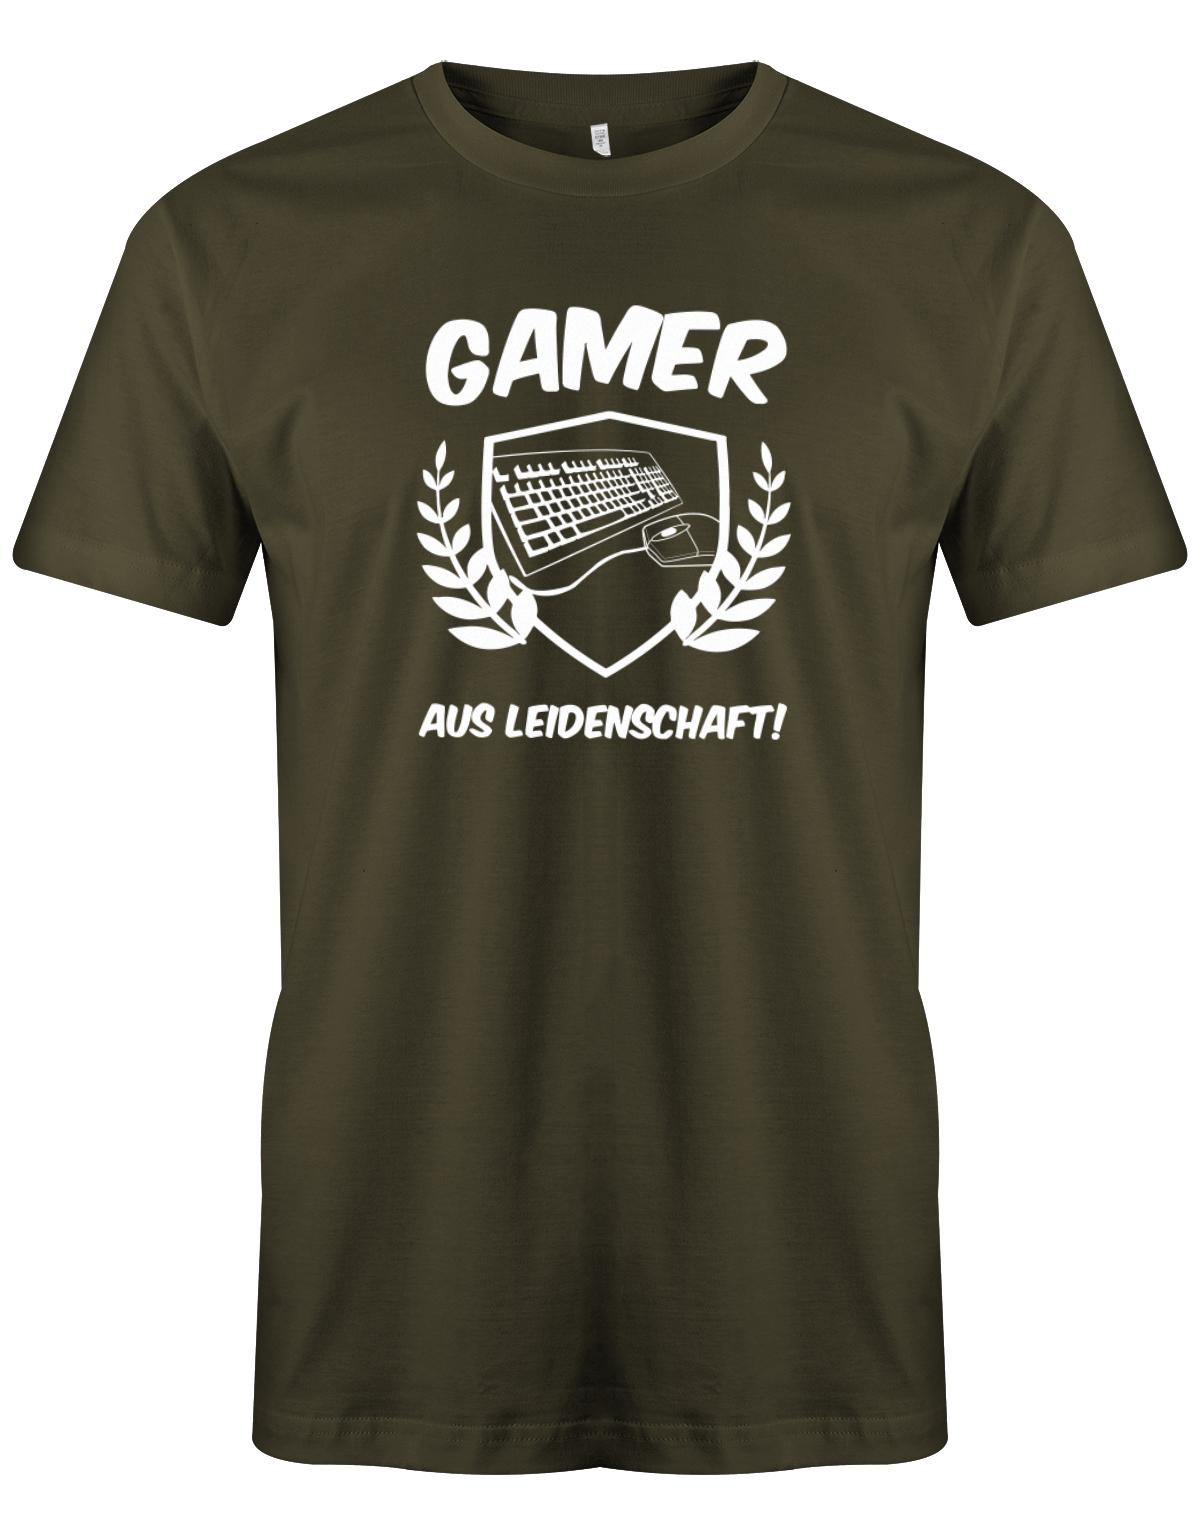 Gamer-Aus-leidenschaft-Herren-Gamer-Shirt-Army